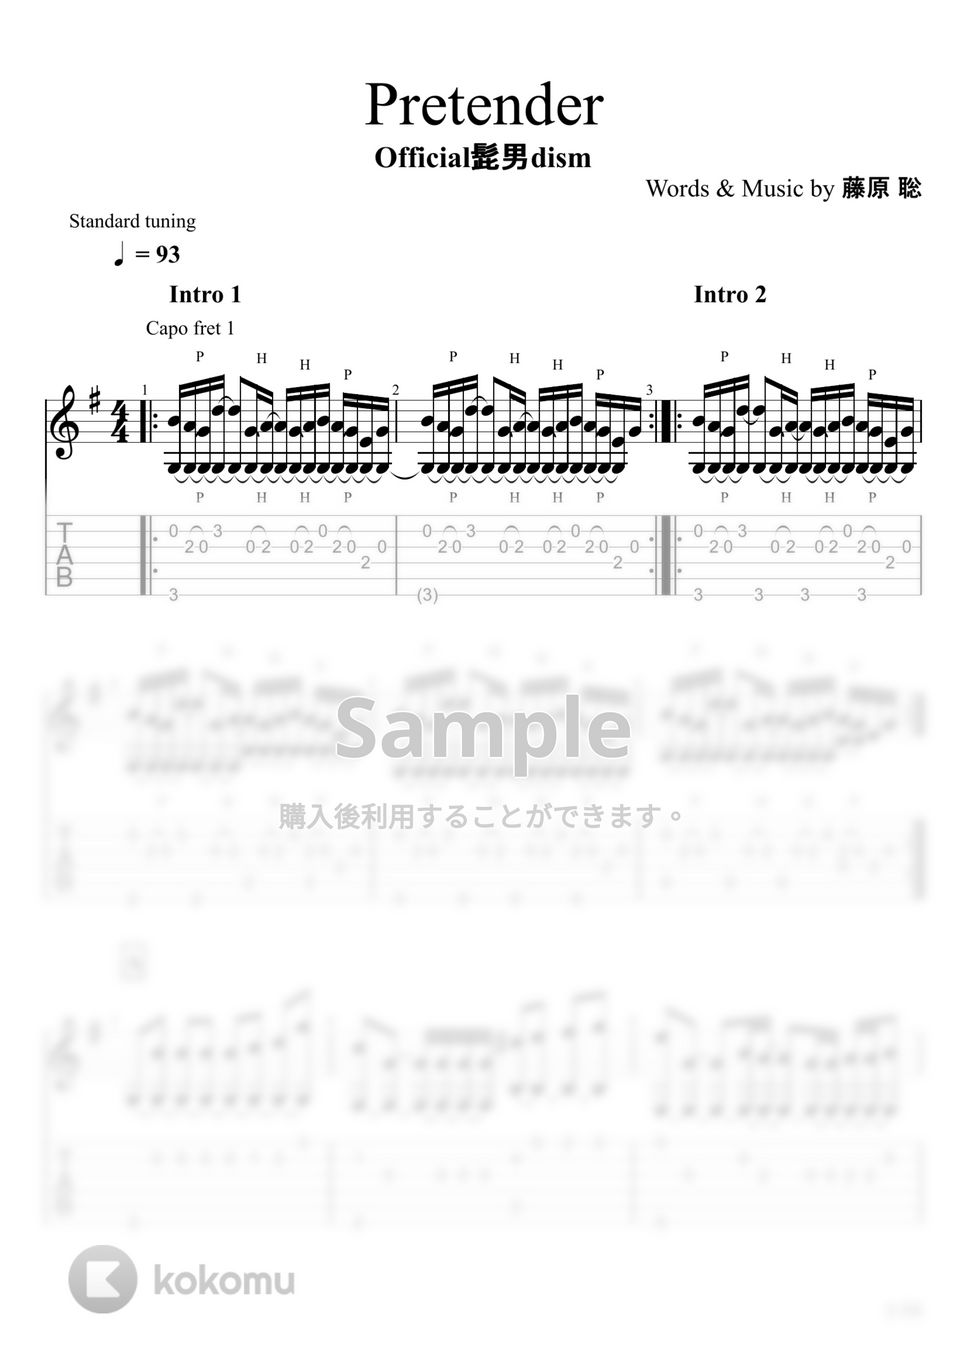 Official髭男dism - Pretender (ソロギター) by u3danchou